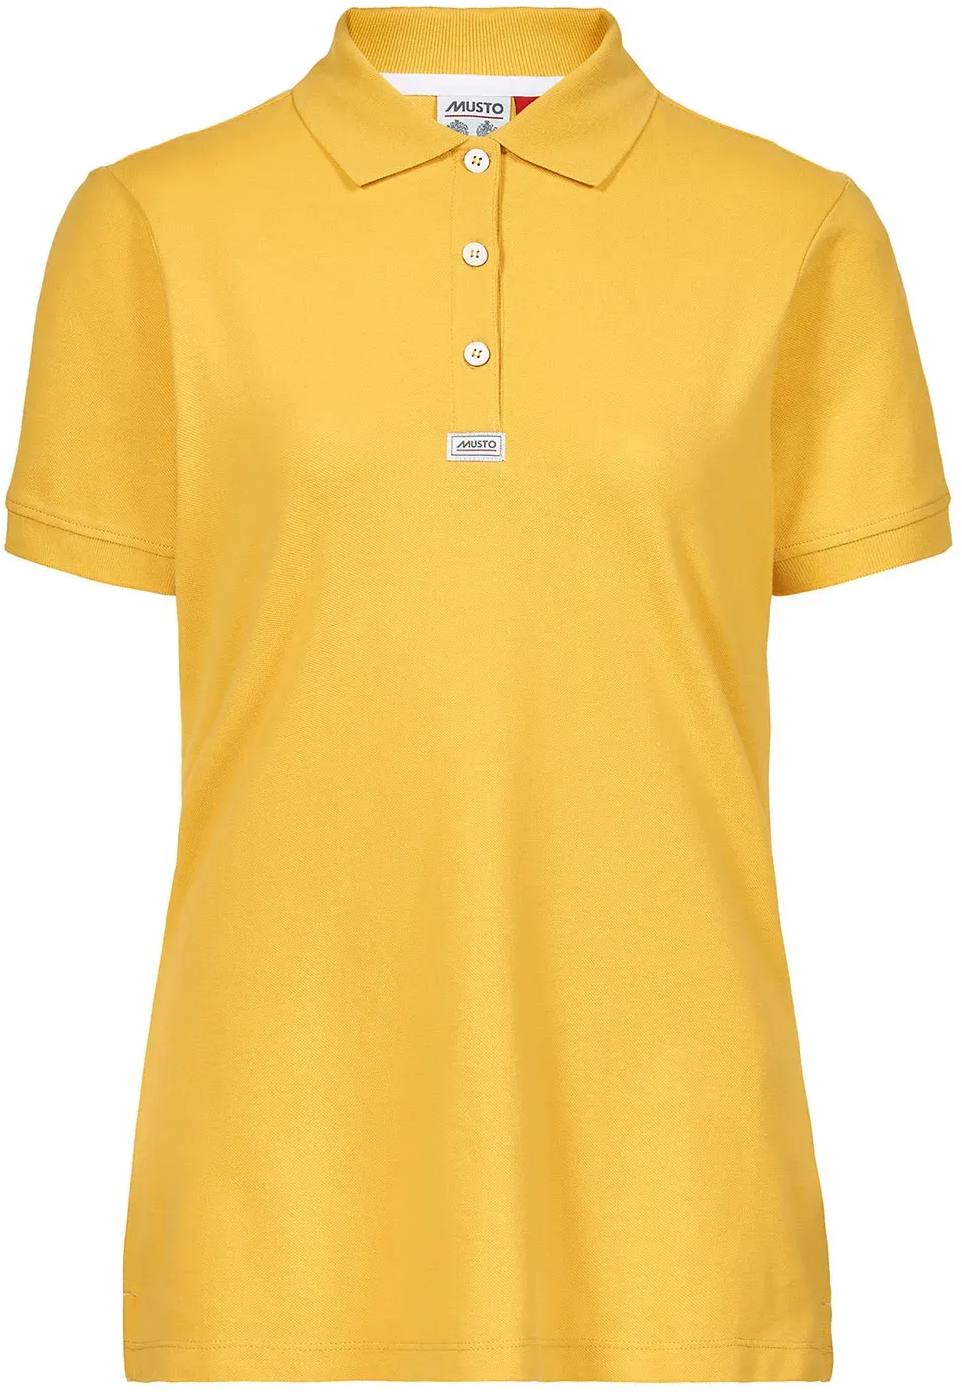 Musto Women's Essential Pique Short-Sleeve Polo Shirt